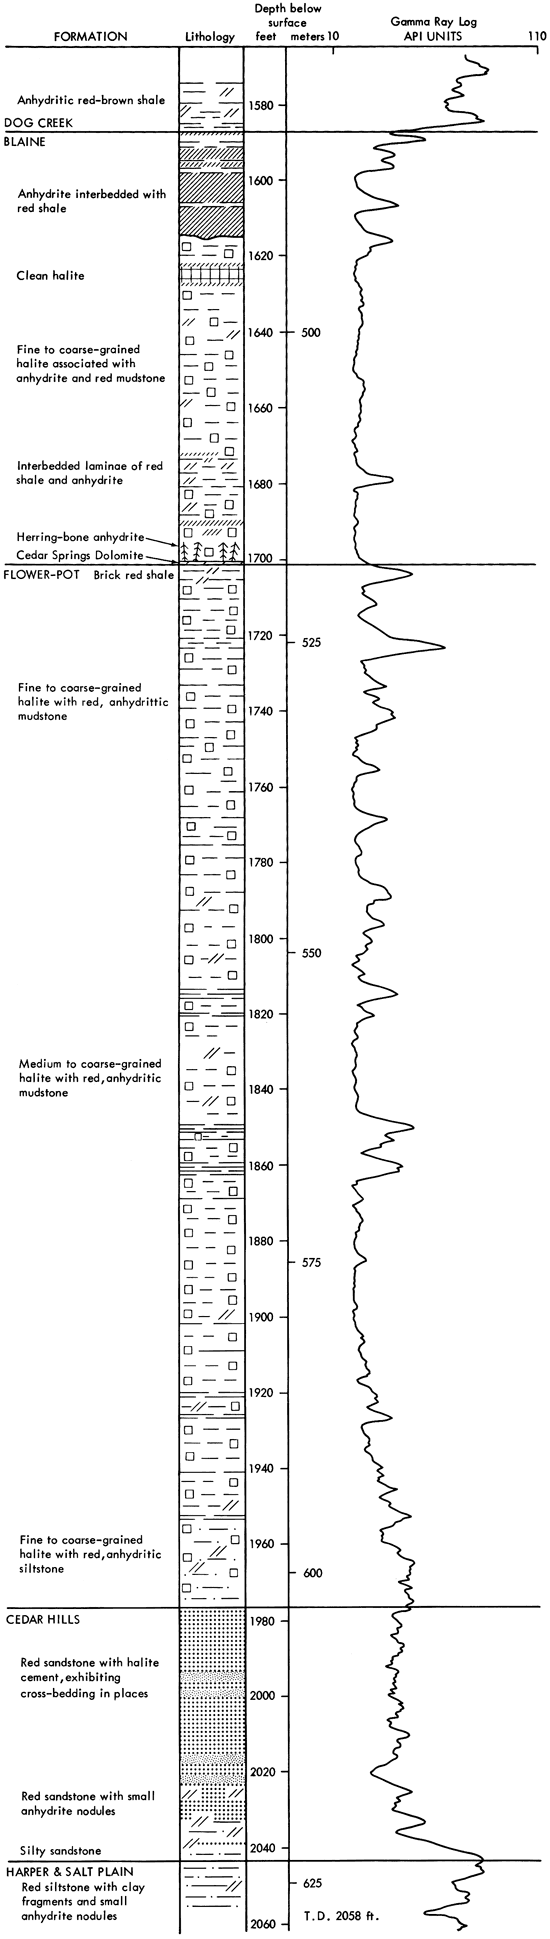 Gamma-ray log and graphical strat section for Dog Creek, Blaine, Flower-pot, Cedar Hills, and Harper-Salt Plain units.